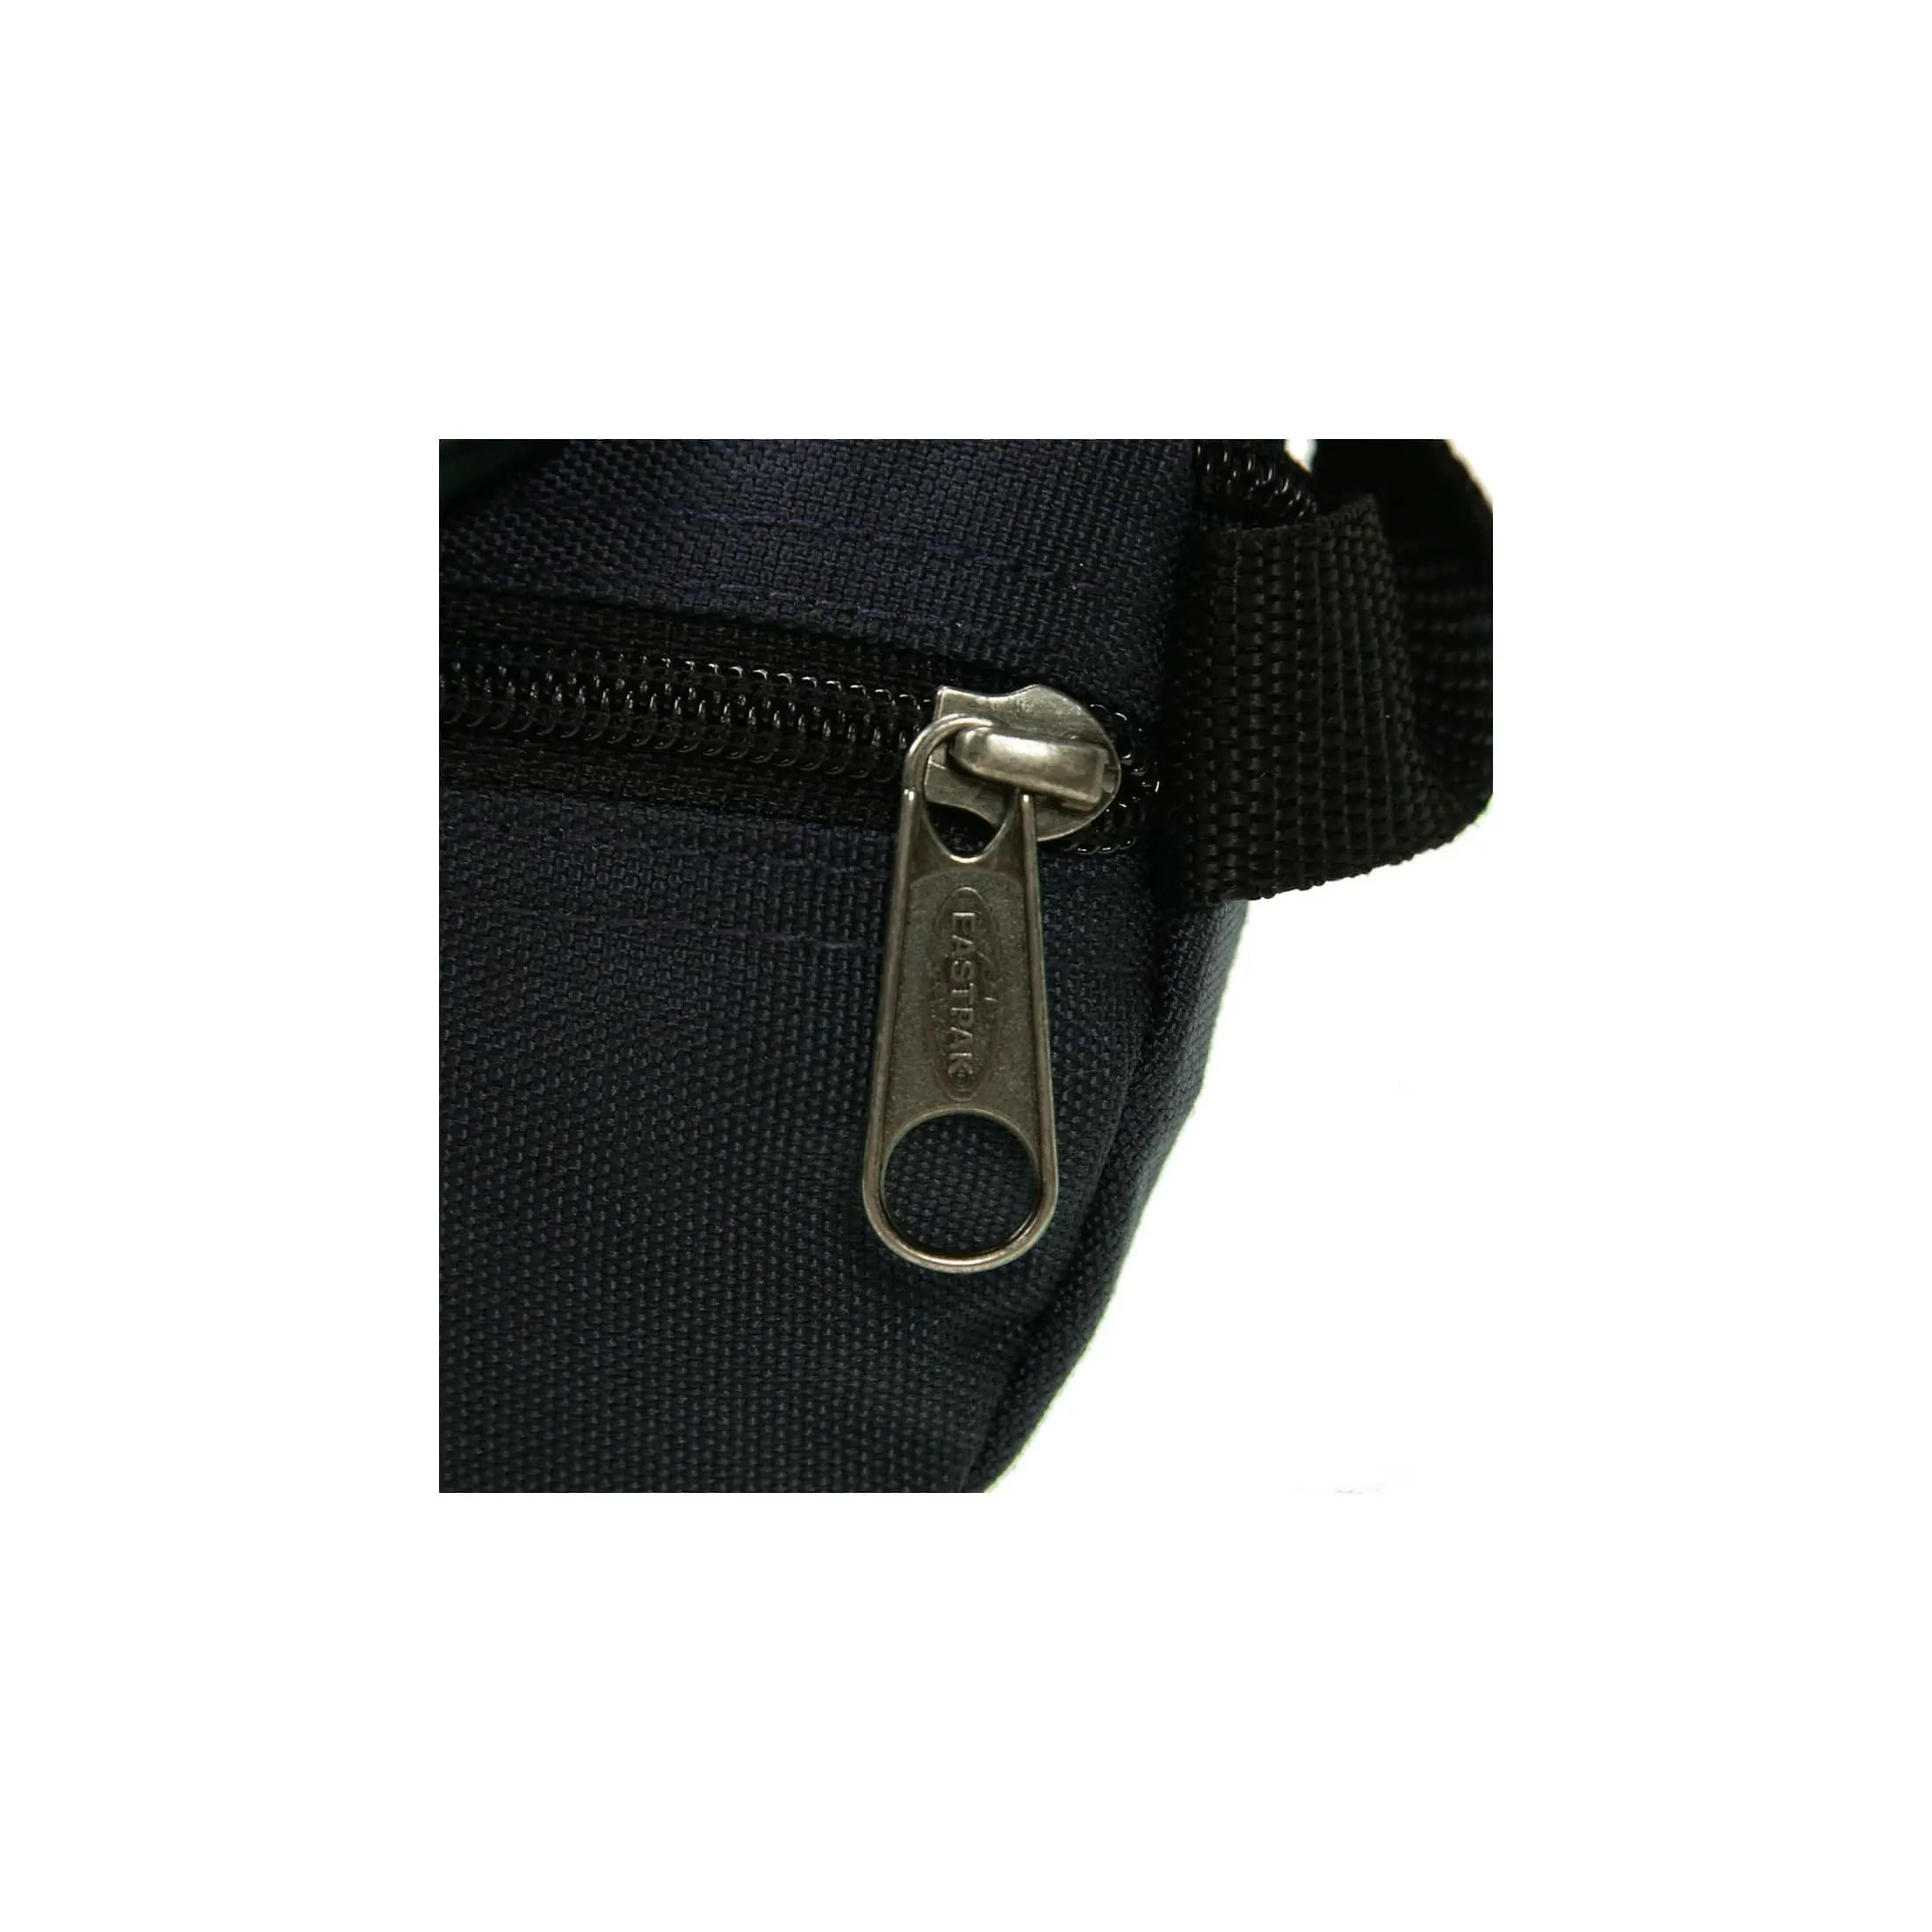 Eastpak Authentic Springer sac ceinture 23 cm - denim noir